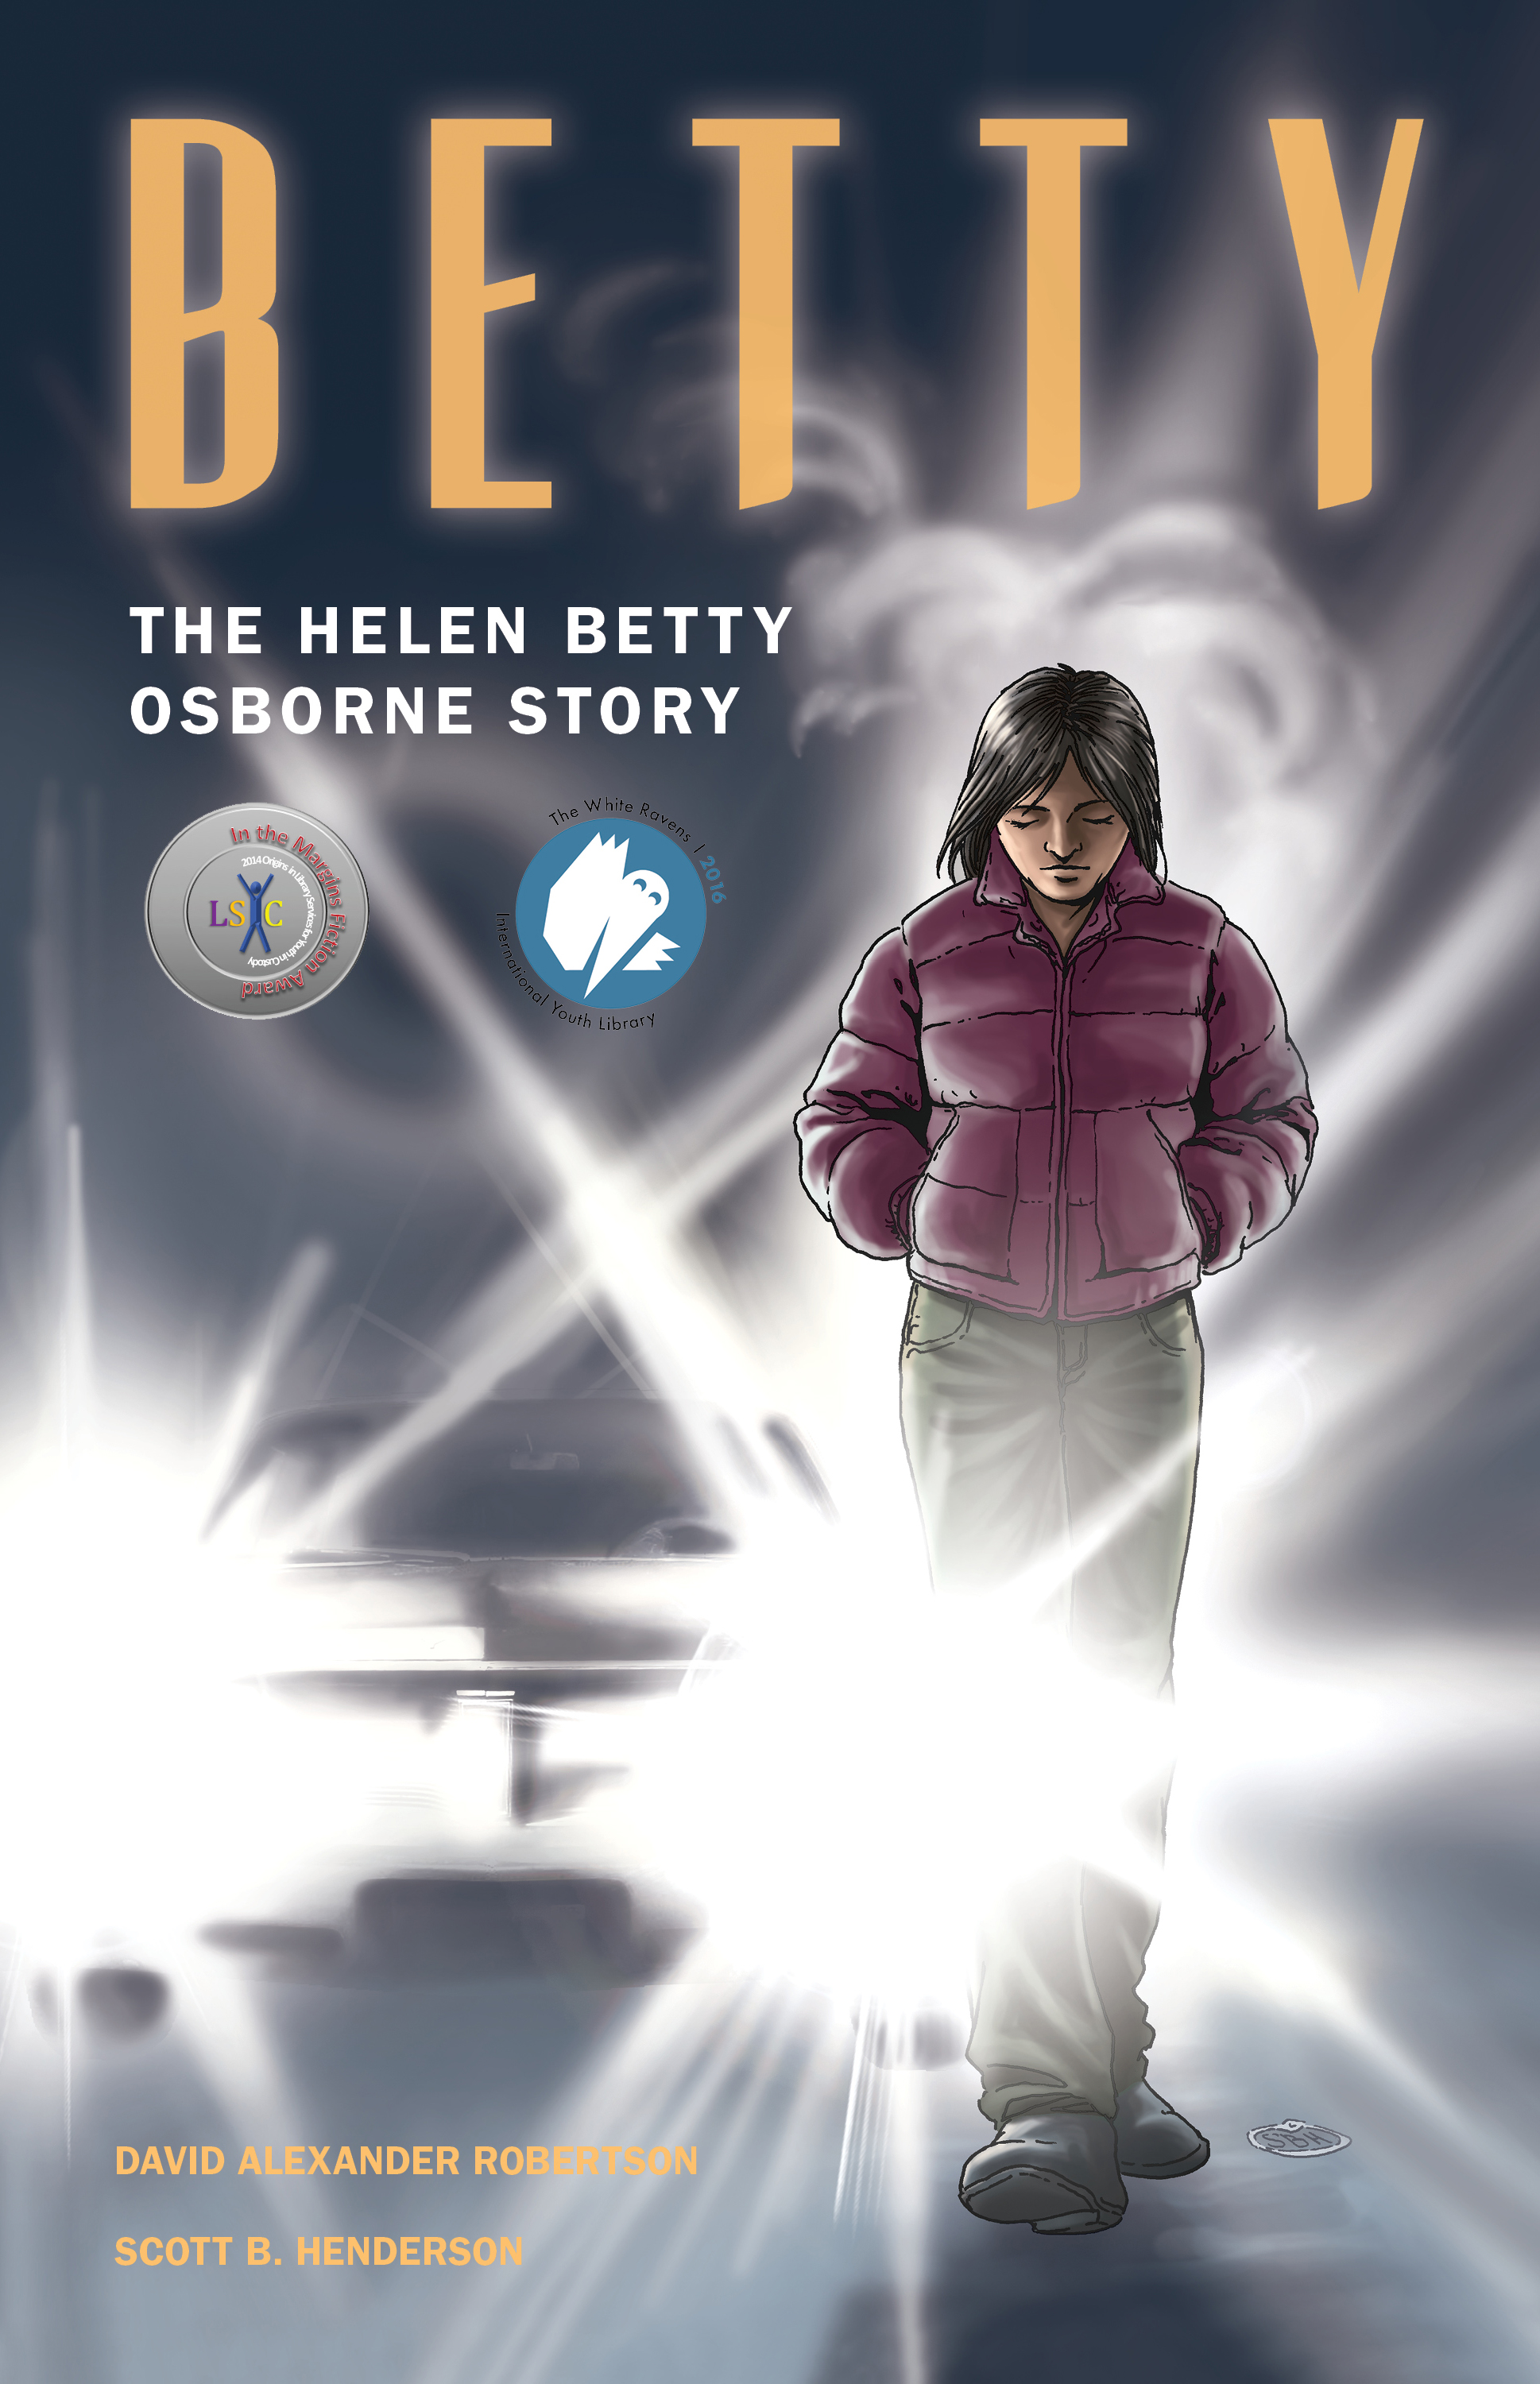 Betty: The Helen Betty Osborne Story by David A. Robertson